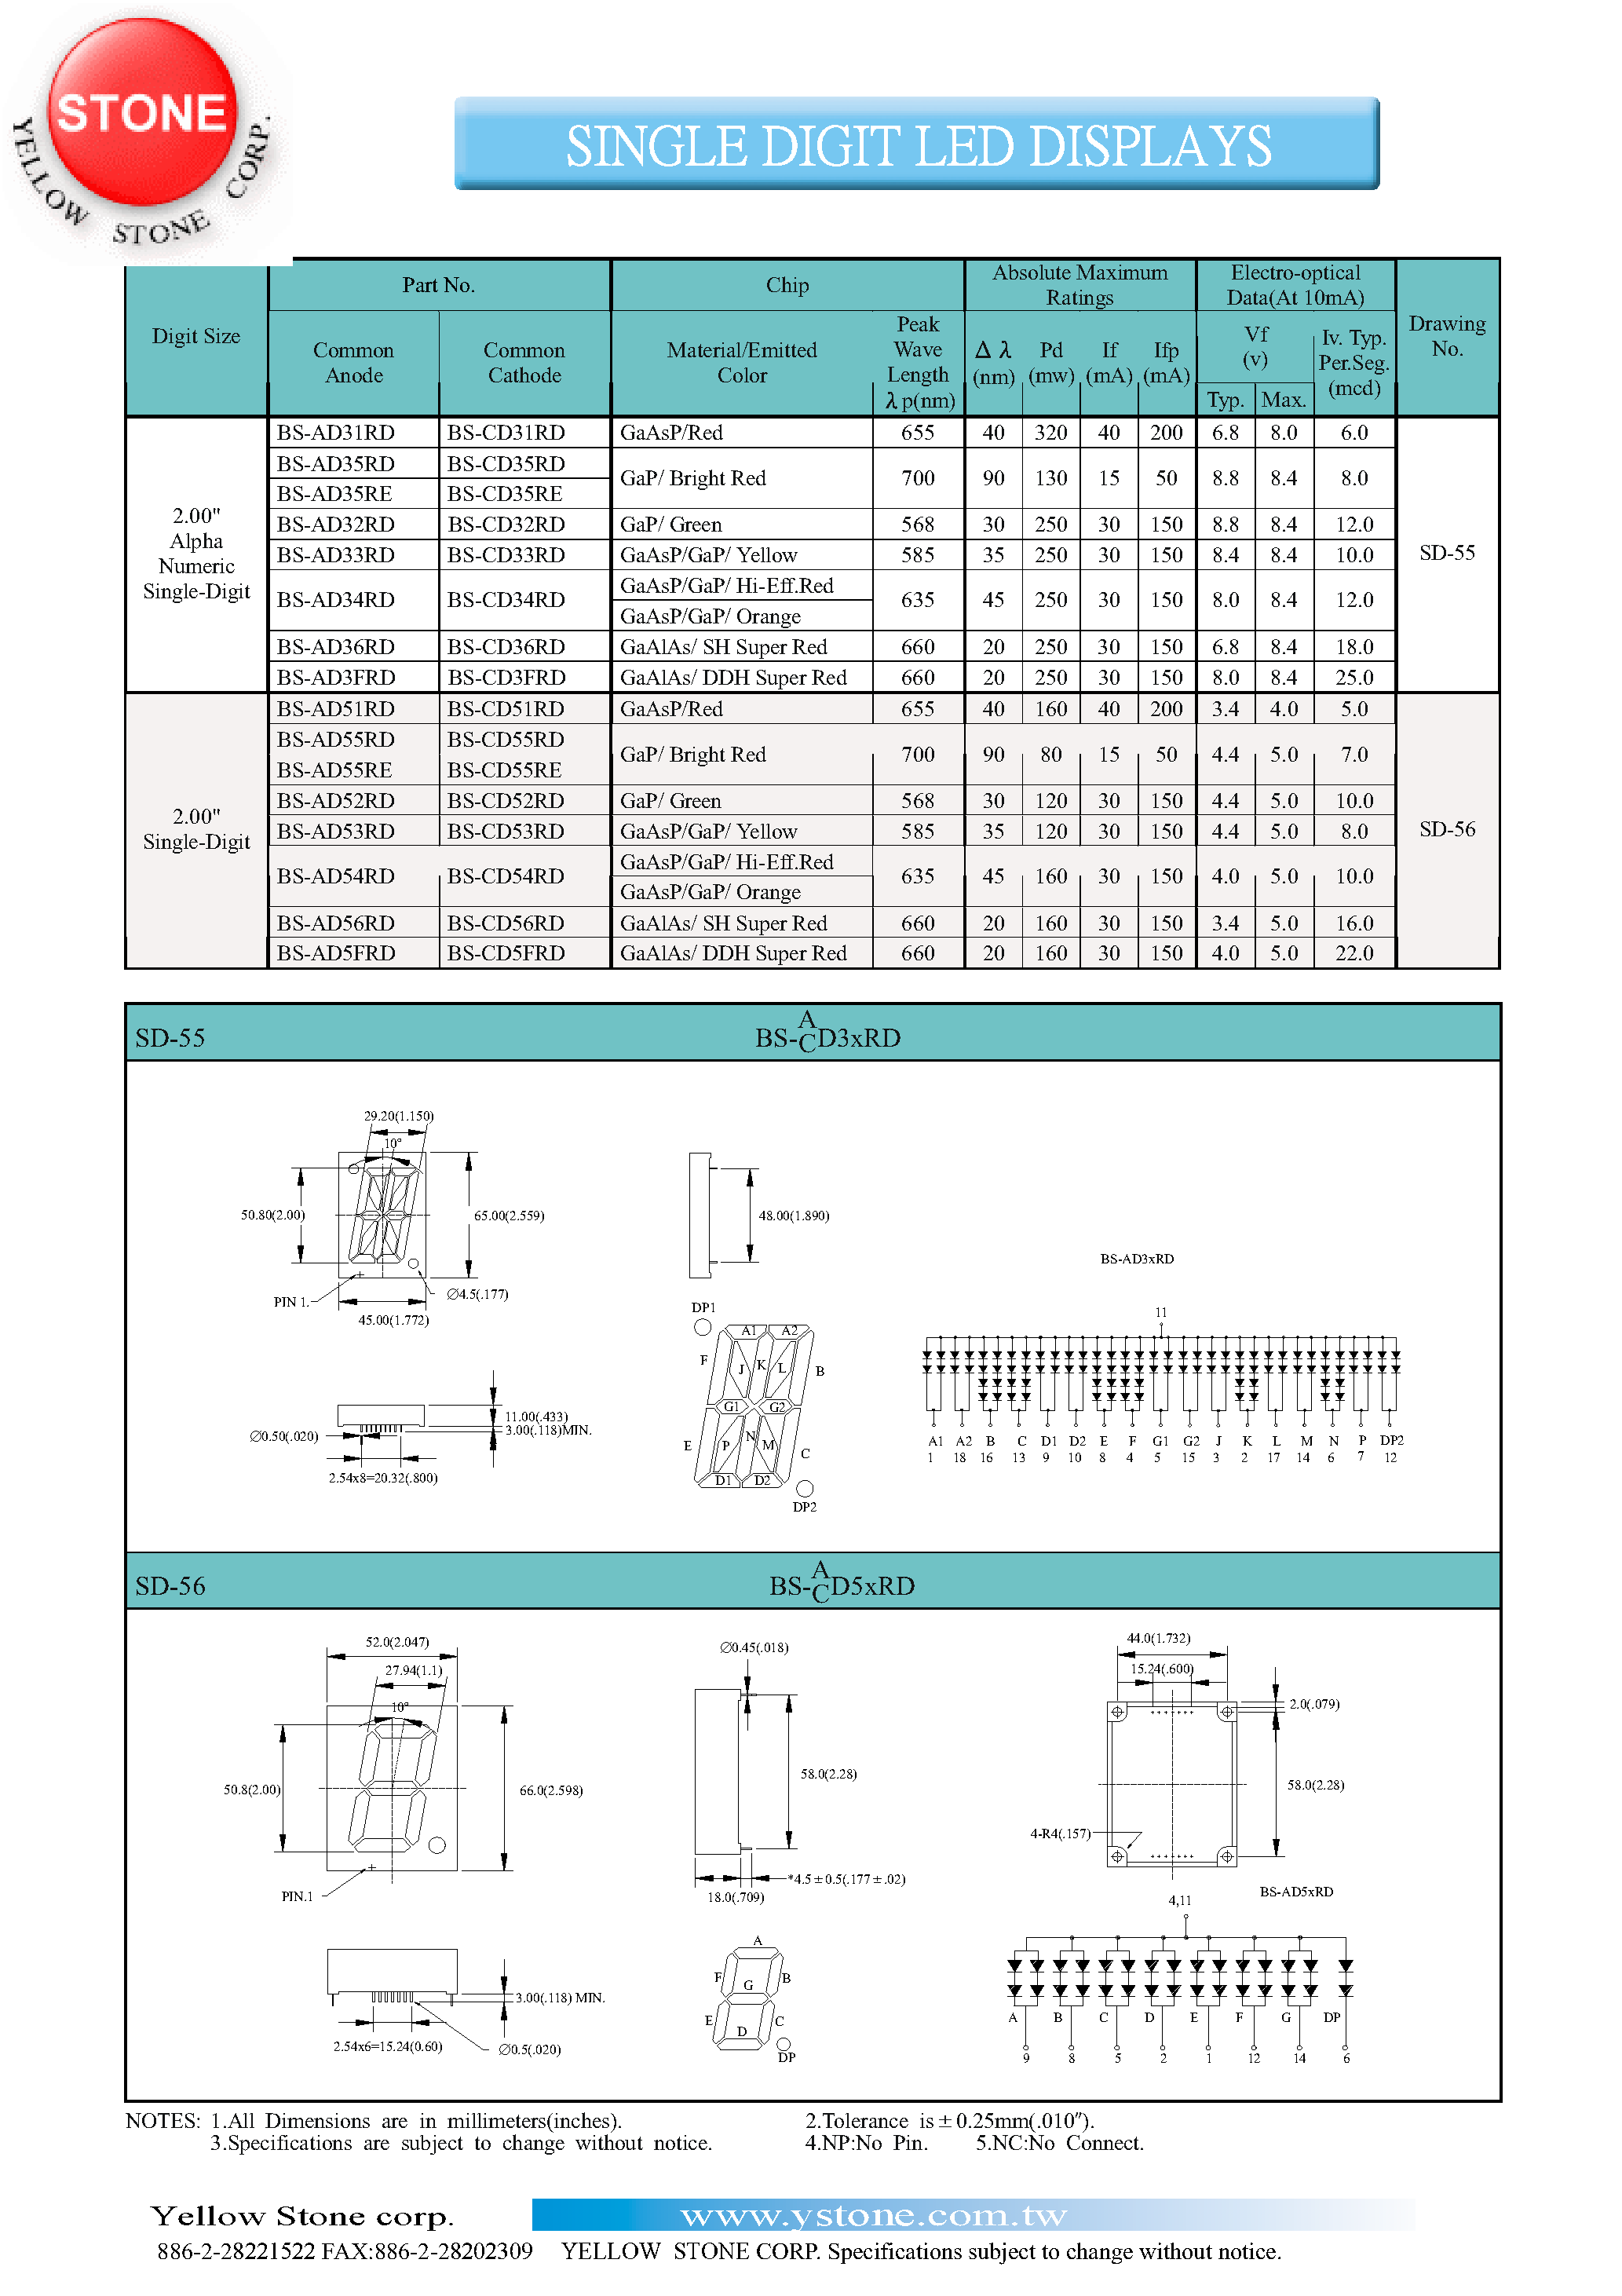 Datasheet BS-AD55RE - SINGLE DIGIT LED DISPLAYS page 1